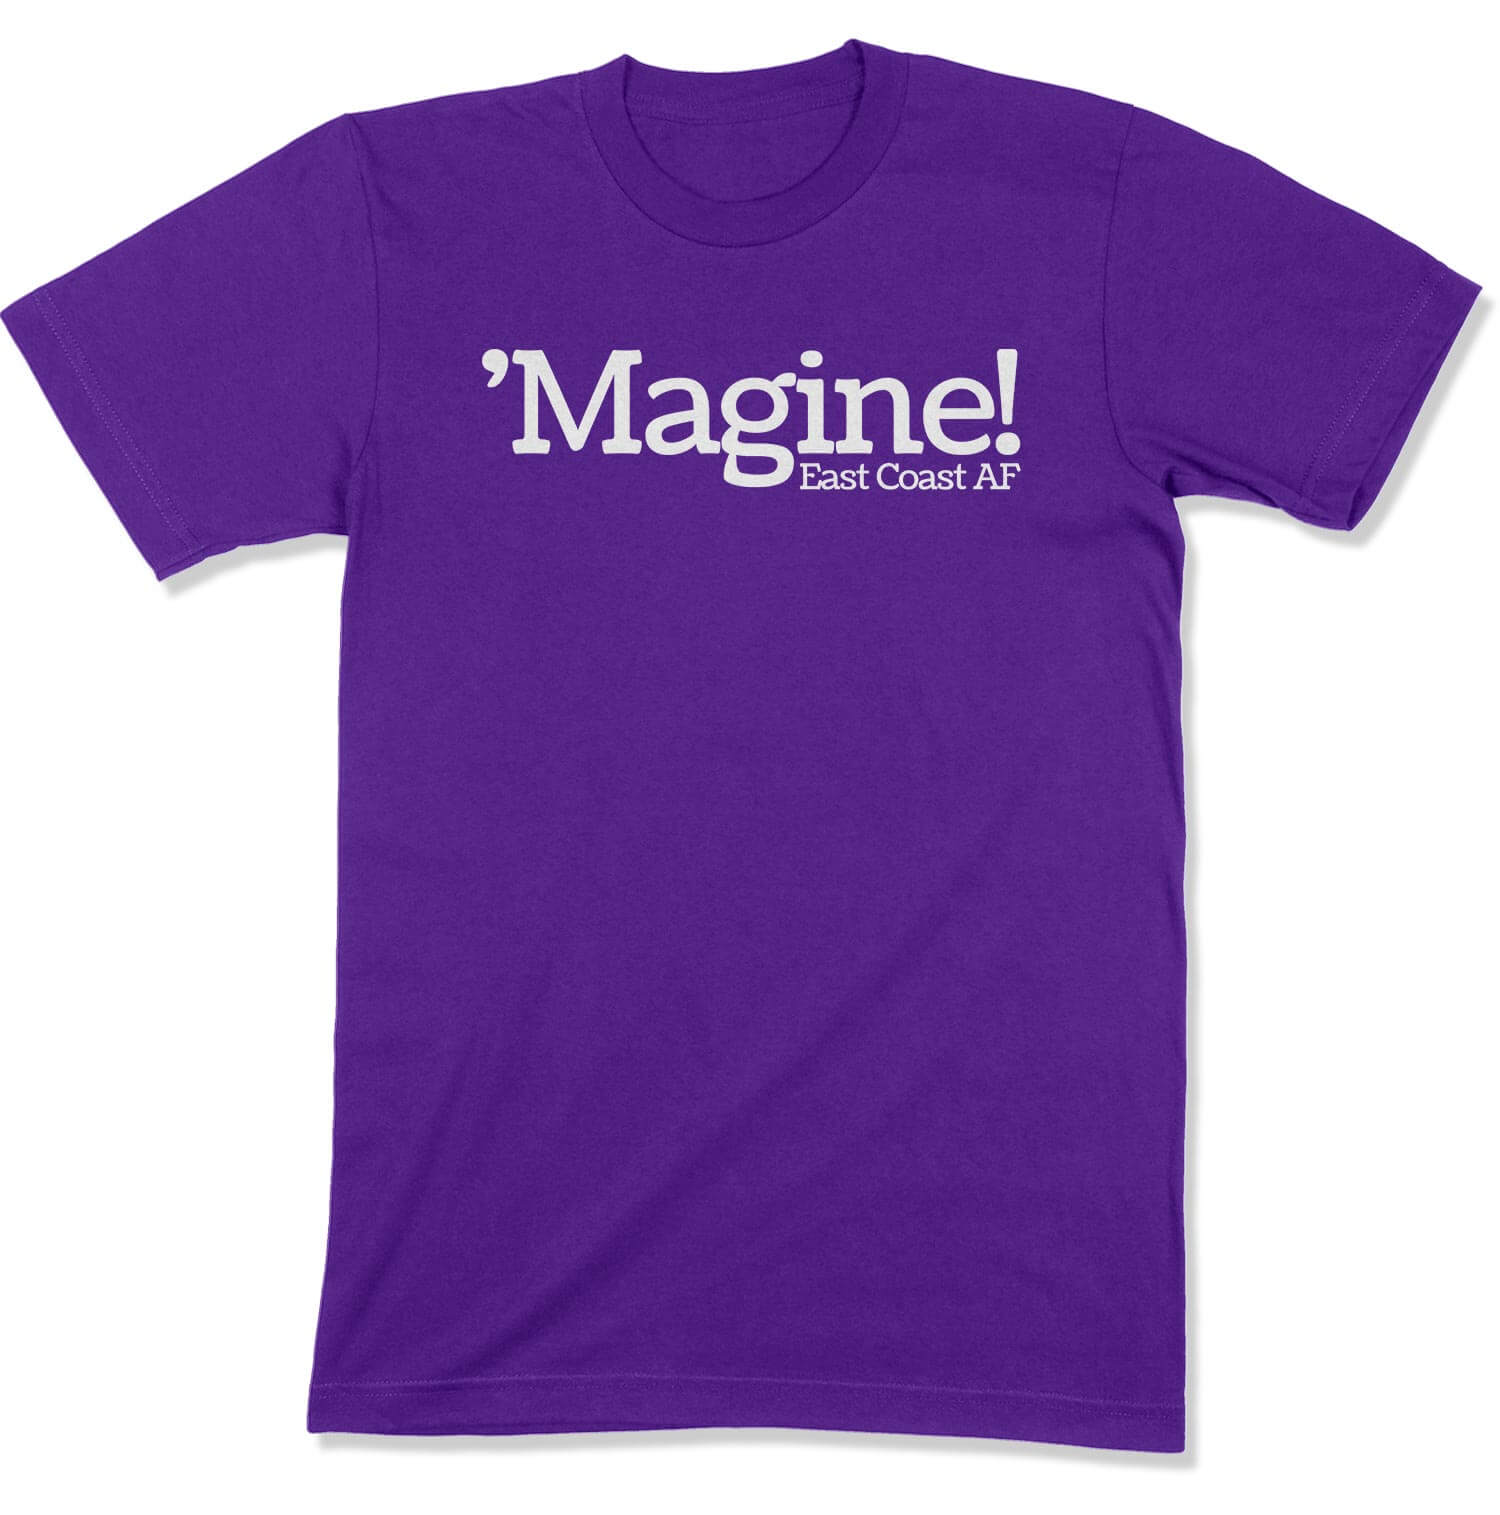 'Magine! Unisex T-Shirt in Color: Purple - East Coast AF Apparel